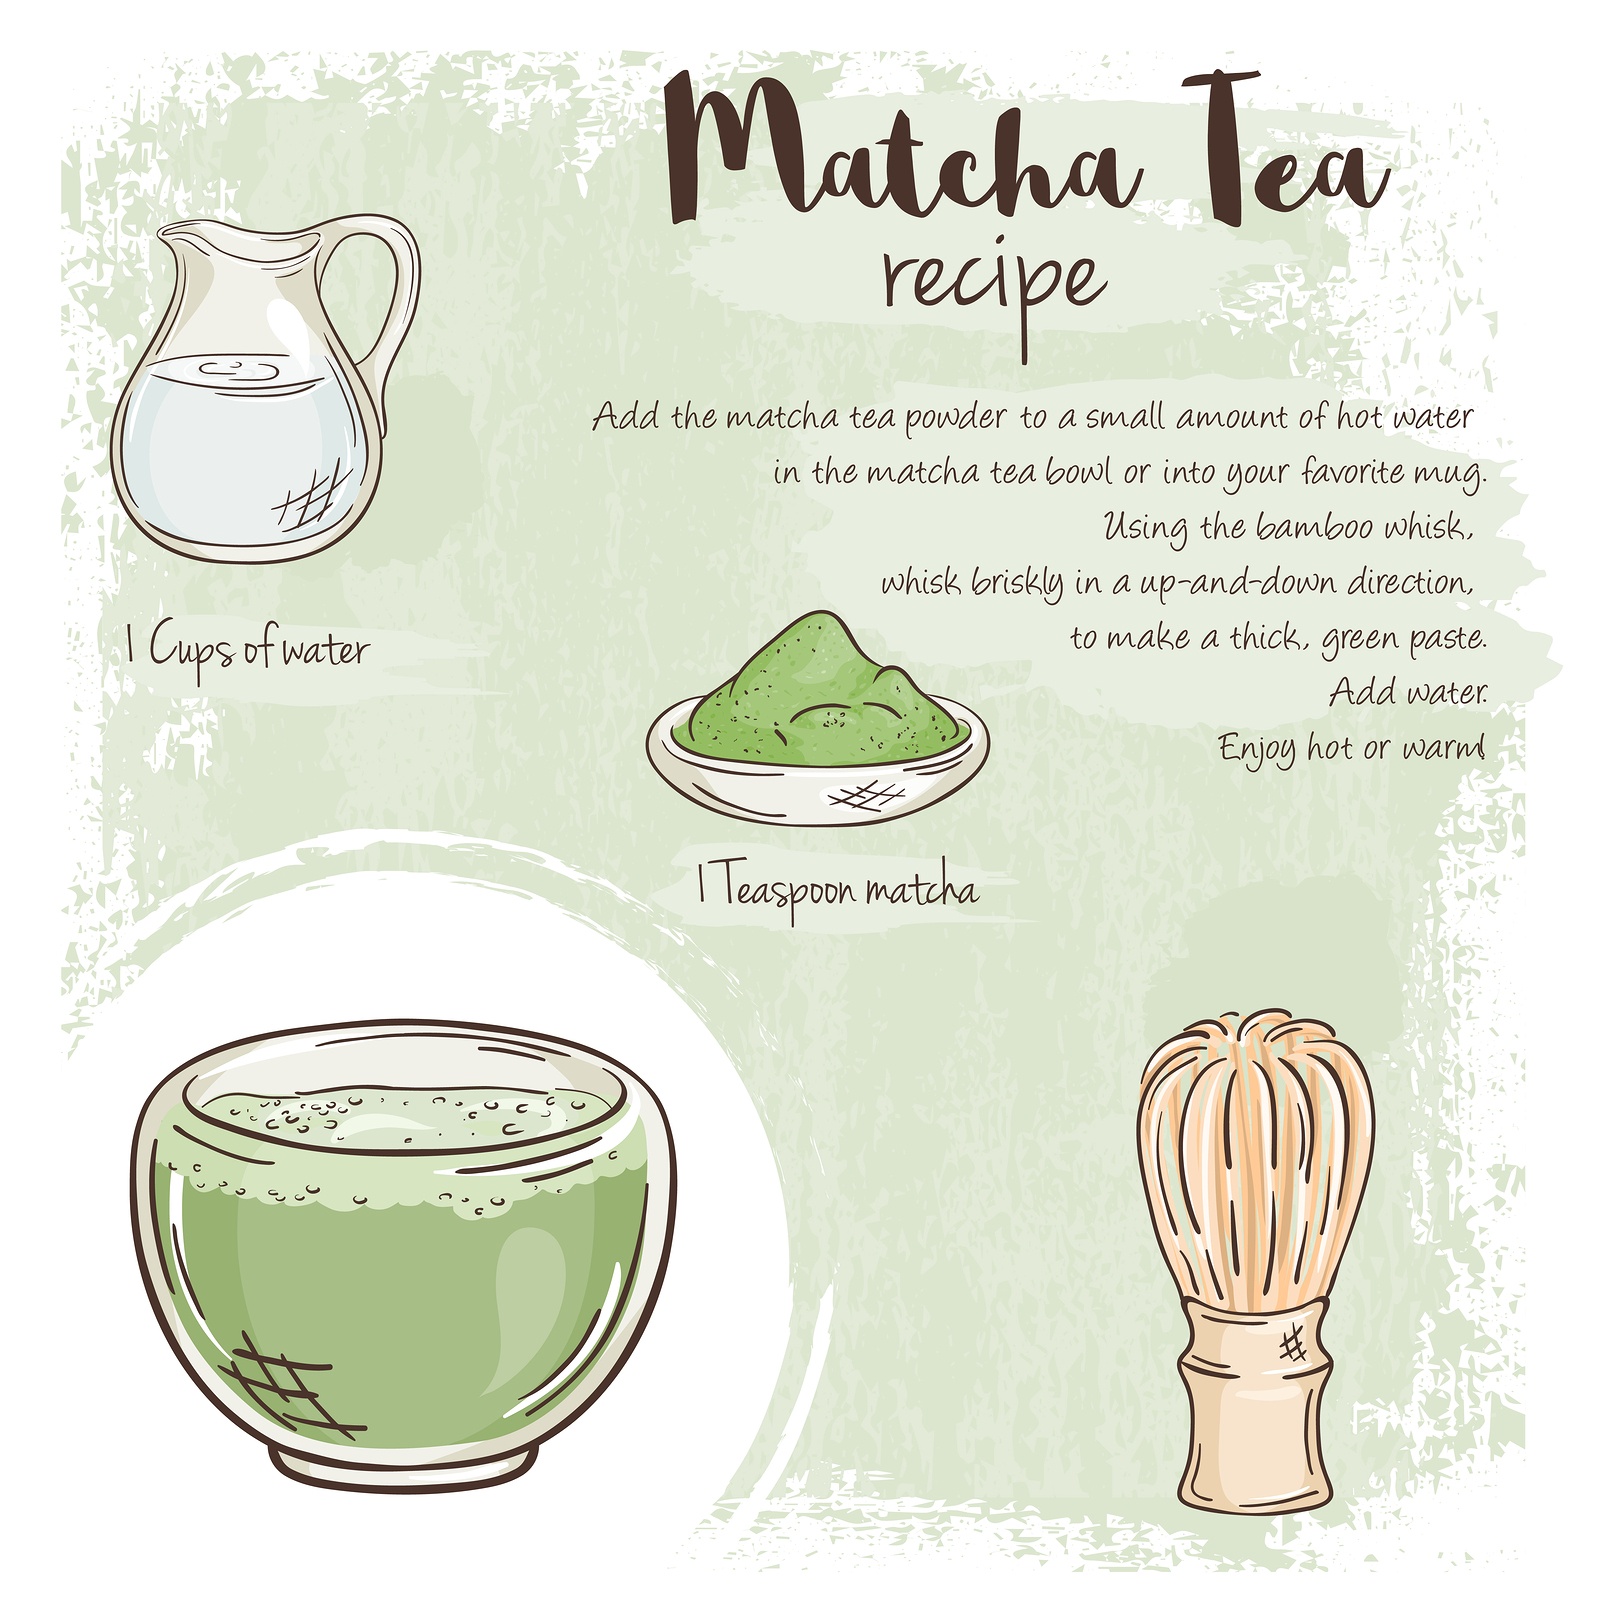 How to prepare Matcha